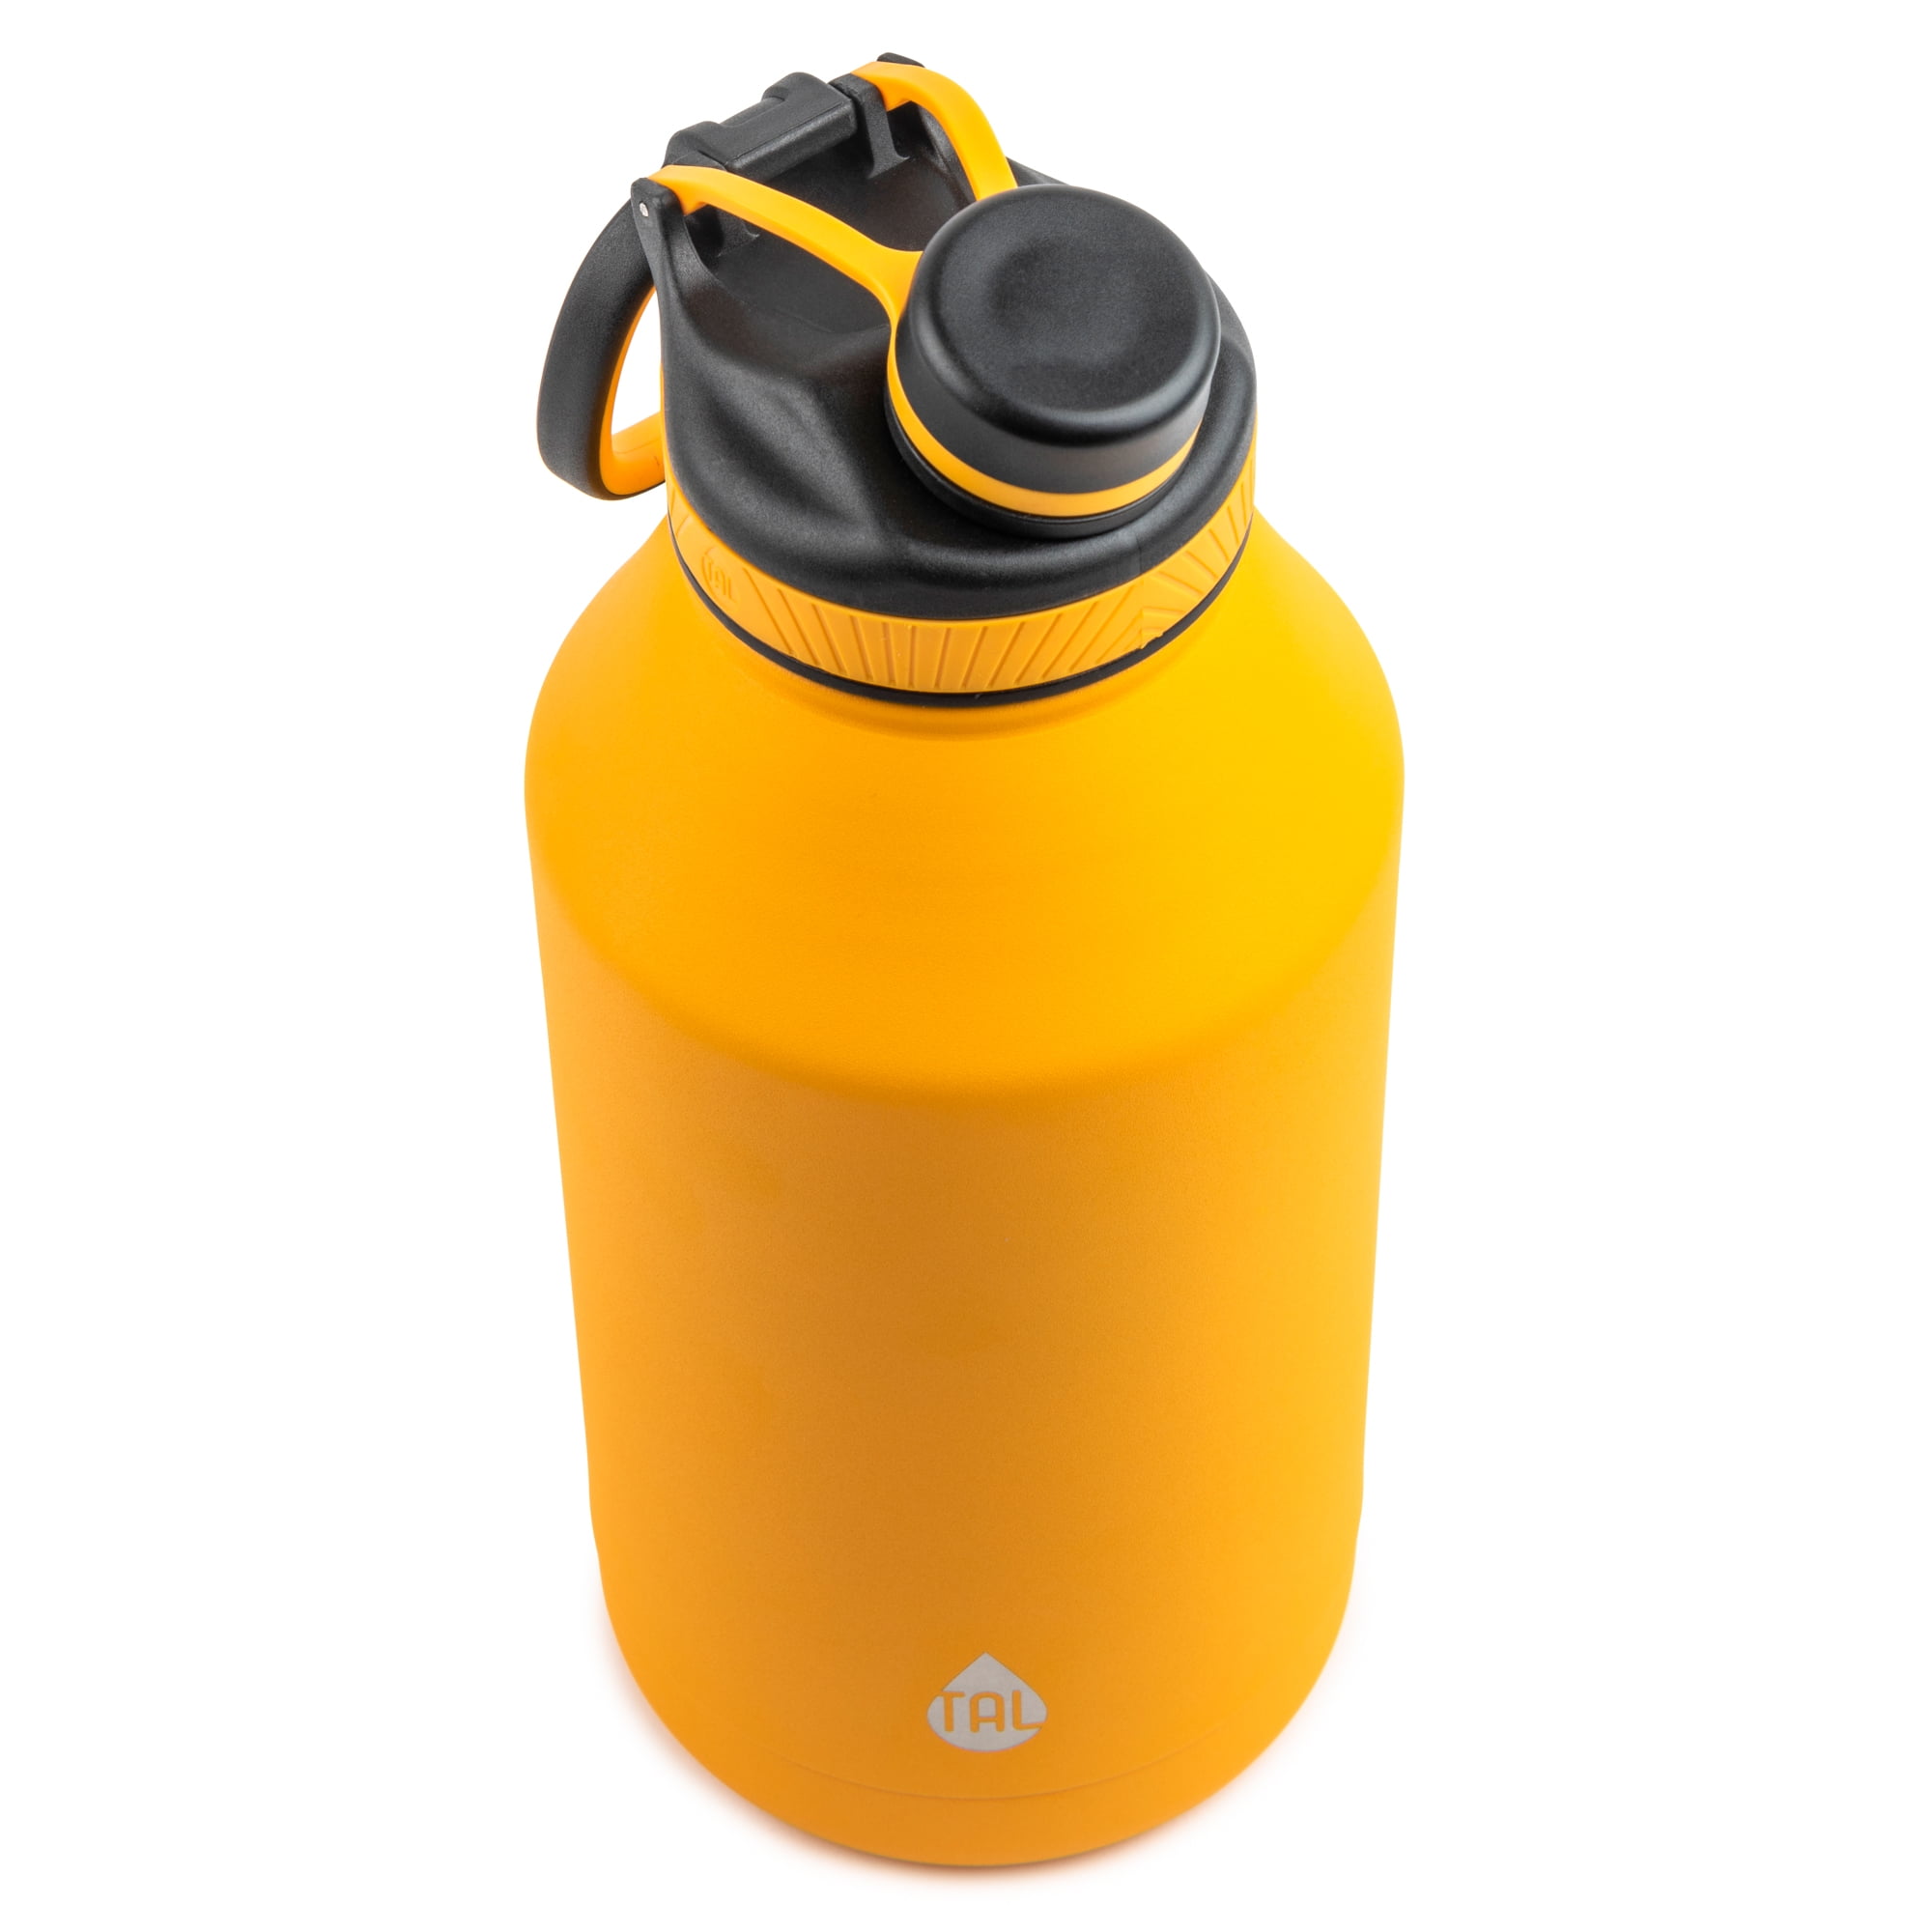 Yellow Arrow Stainless Steel Water Bottle — Yellow Arrow Publishing